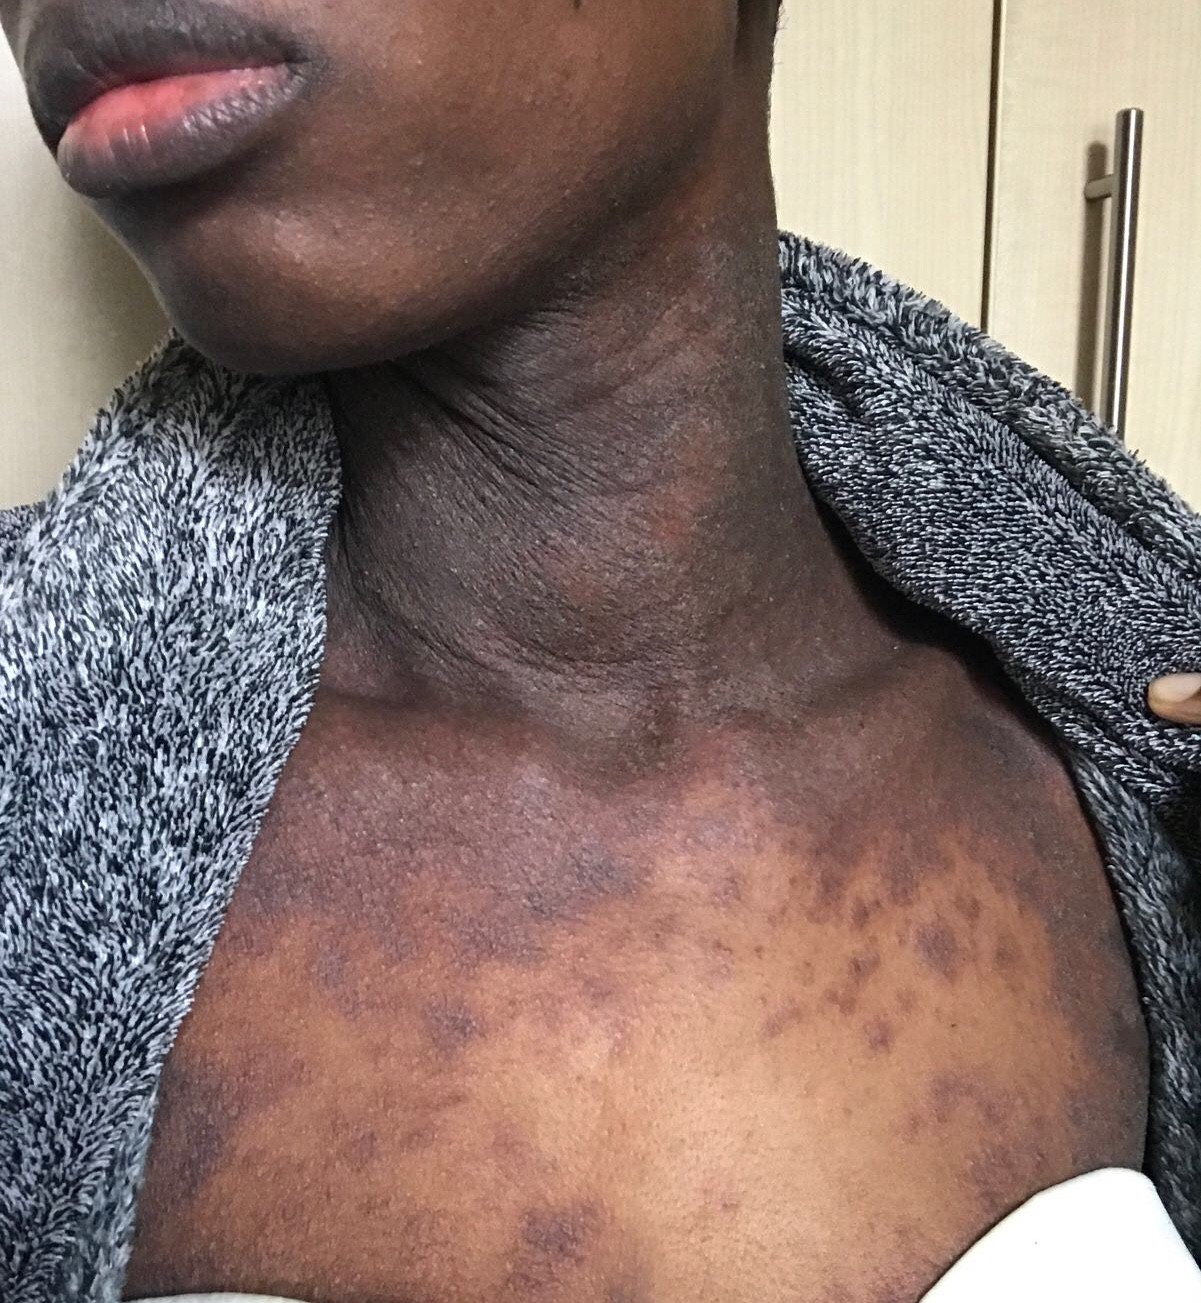 Eczema rash on Joanne's neck